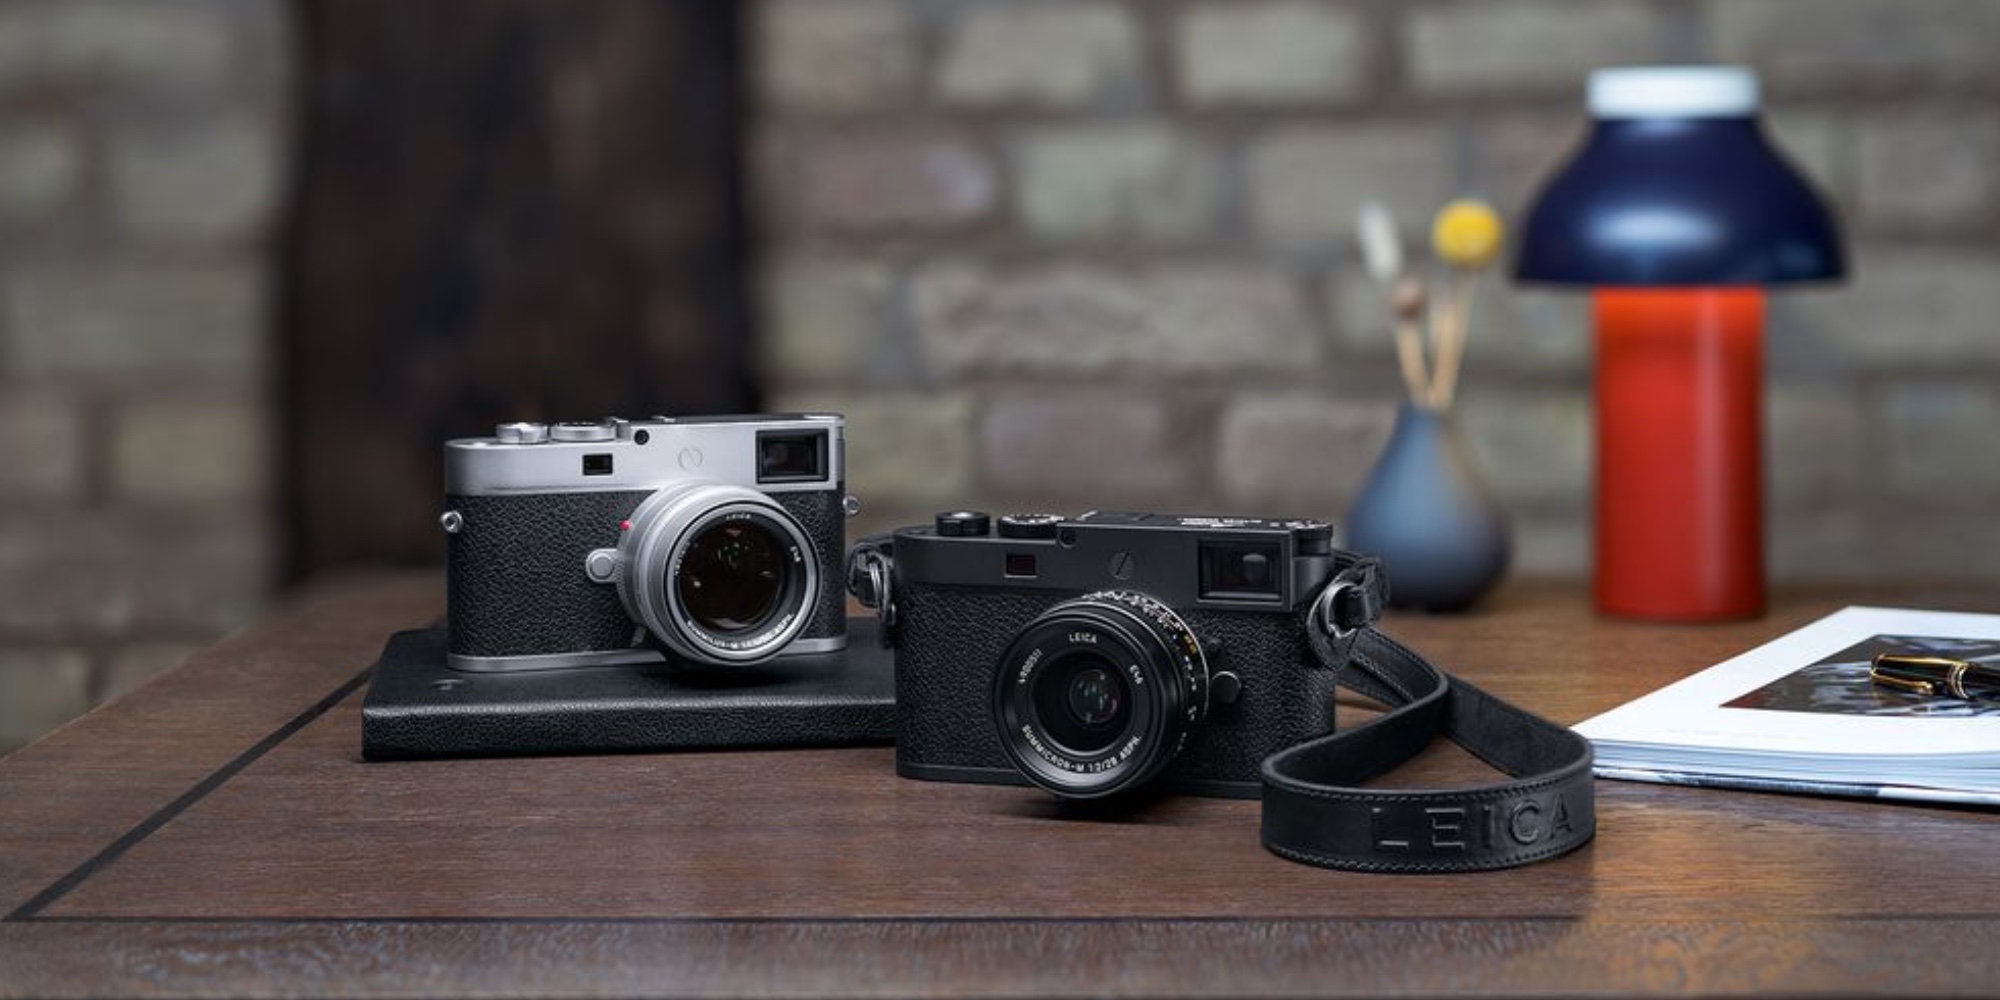 Leica M11 camera in black with full-frame BSI CMOS Sensor